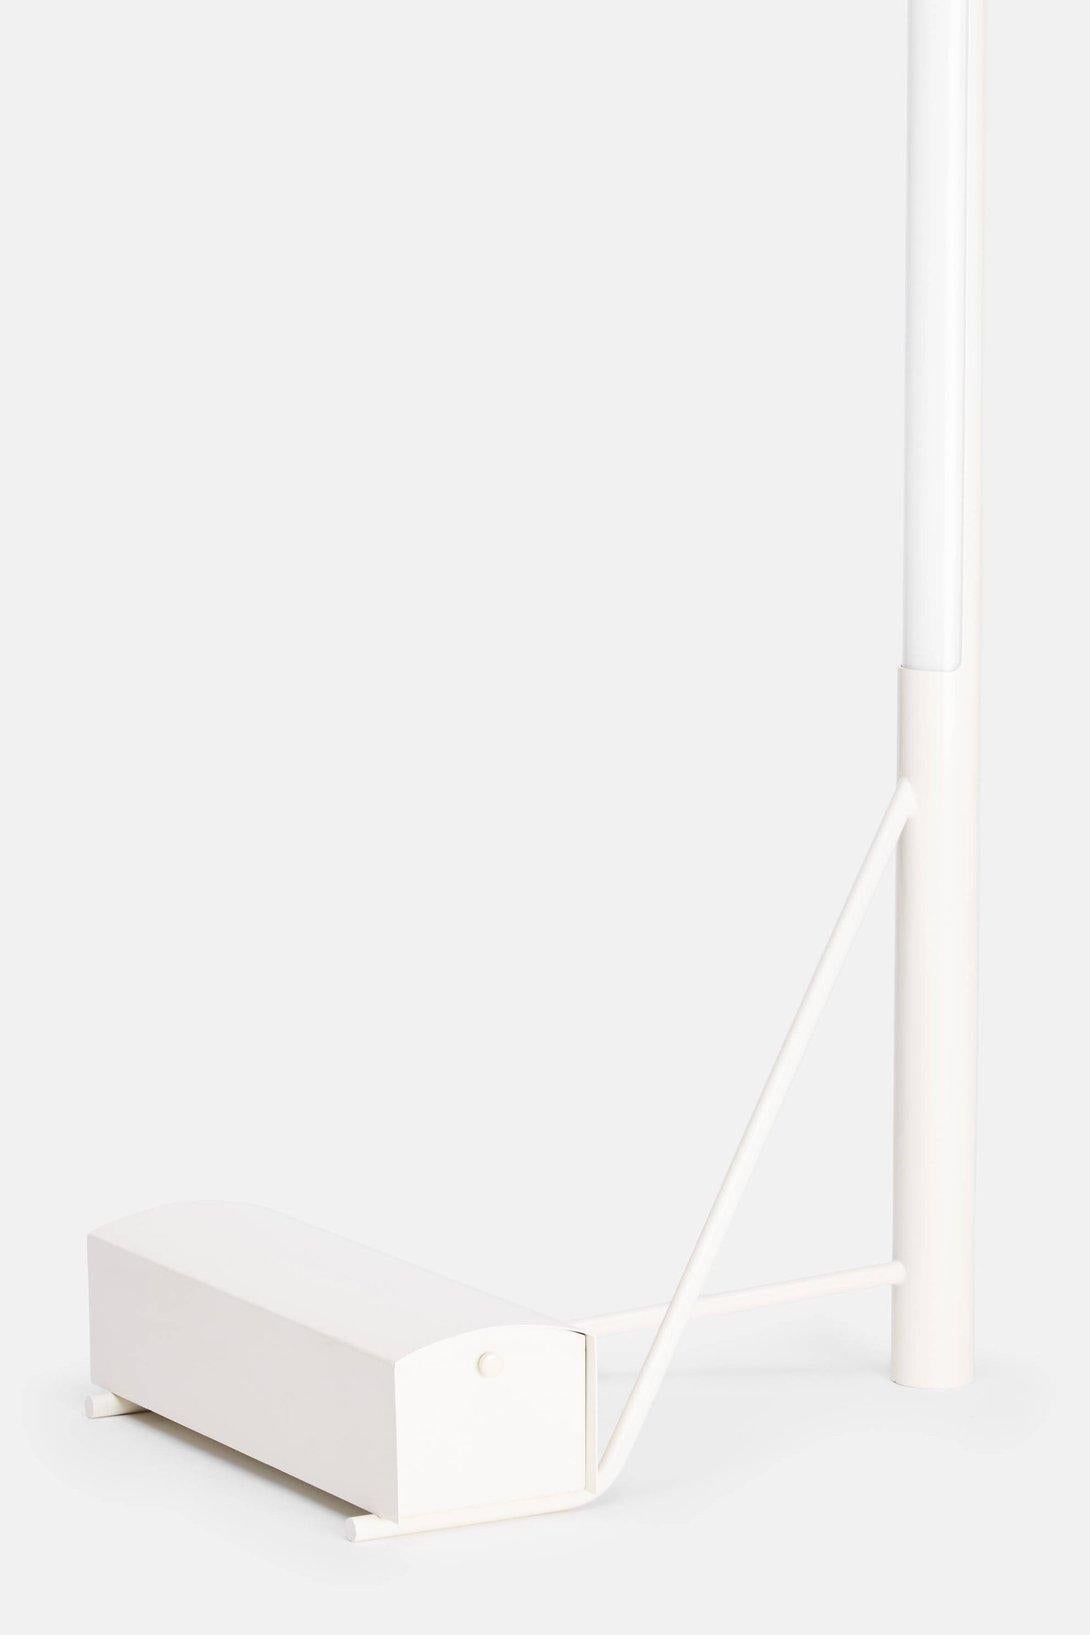 Painted Gino Sarfatti Model #1063 Floor Lamp in Black and White